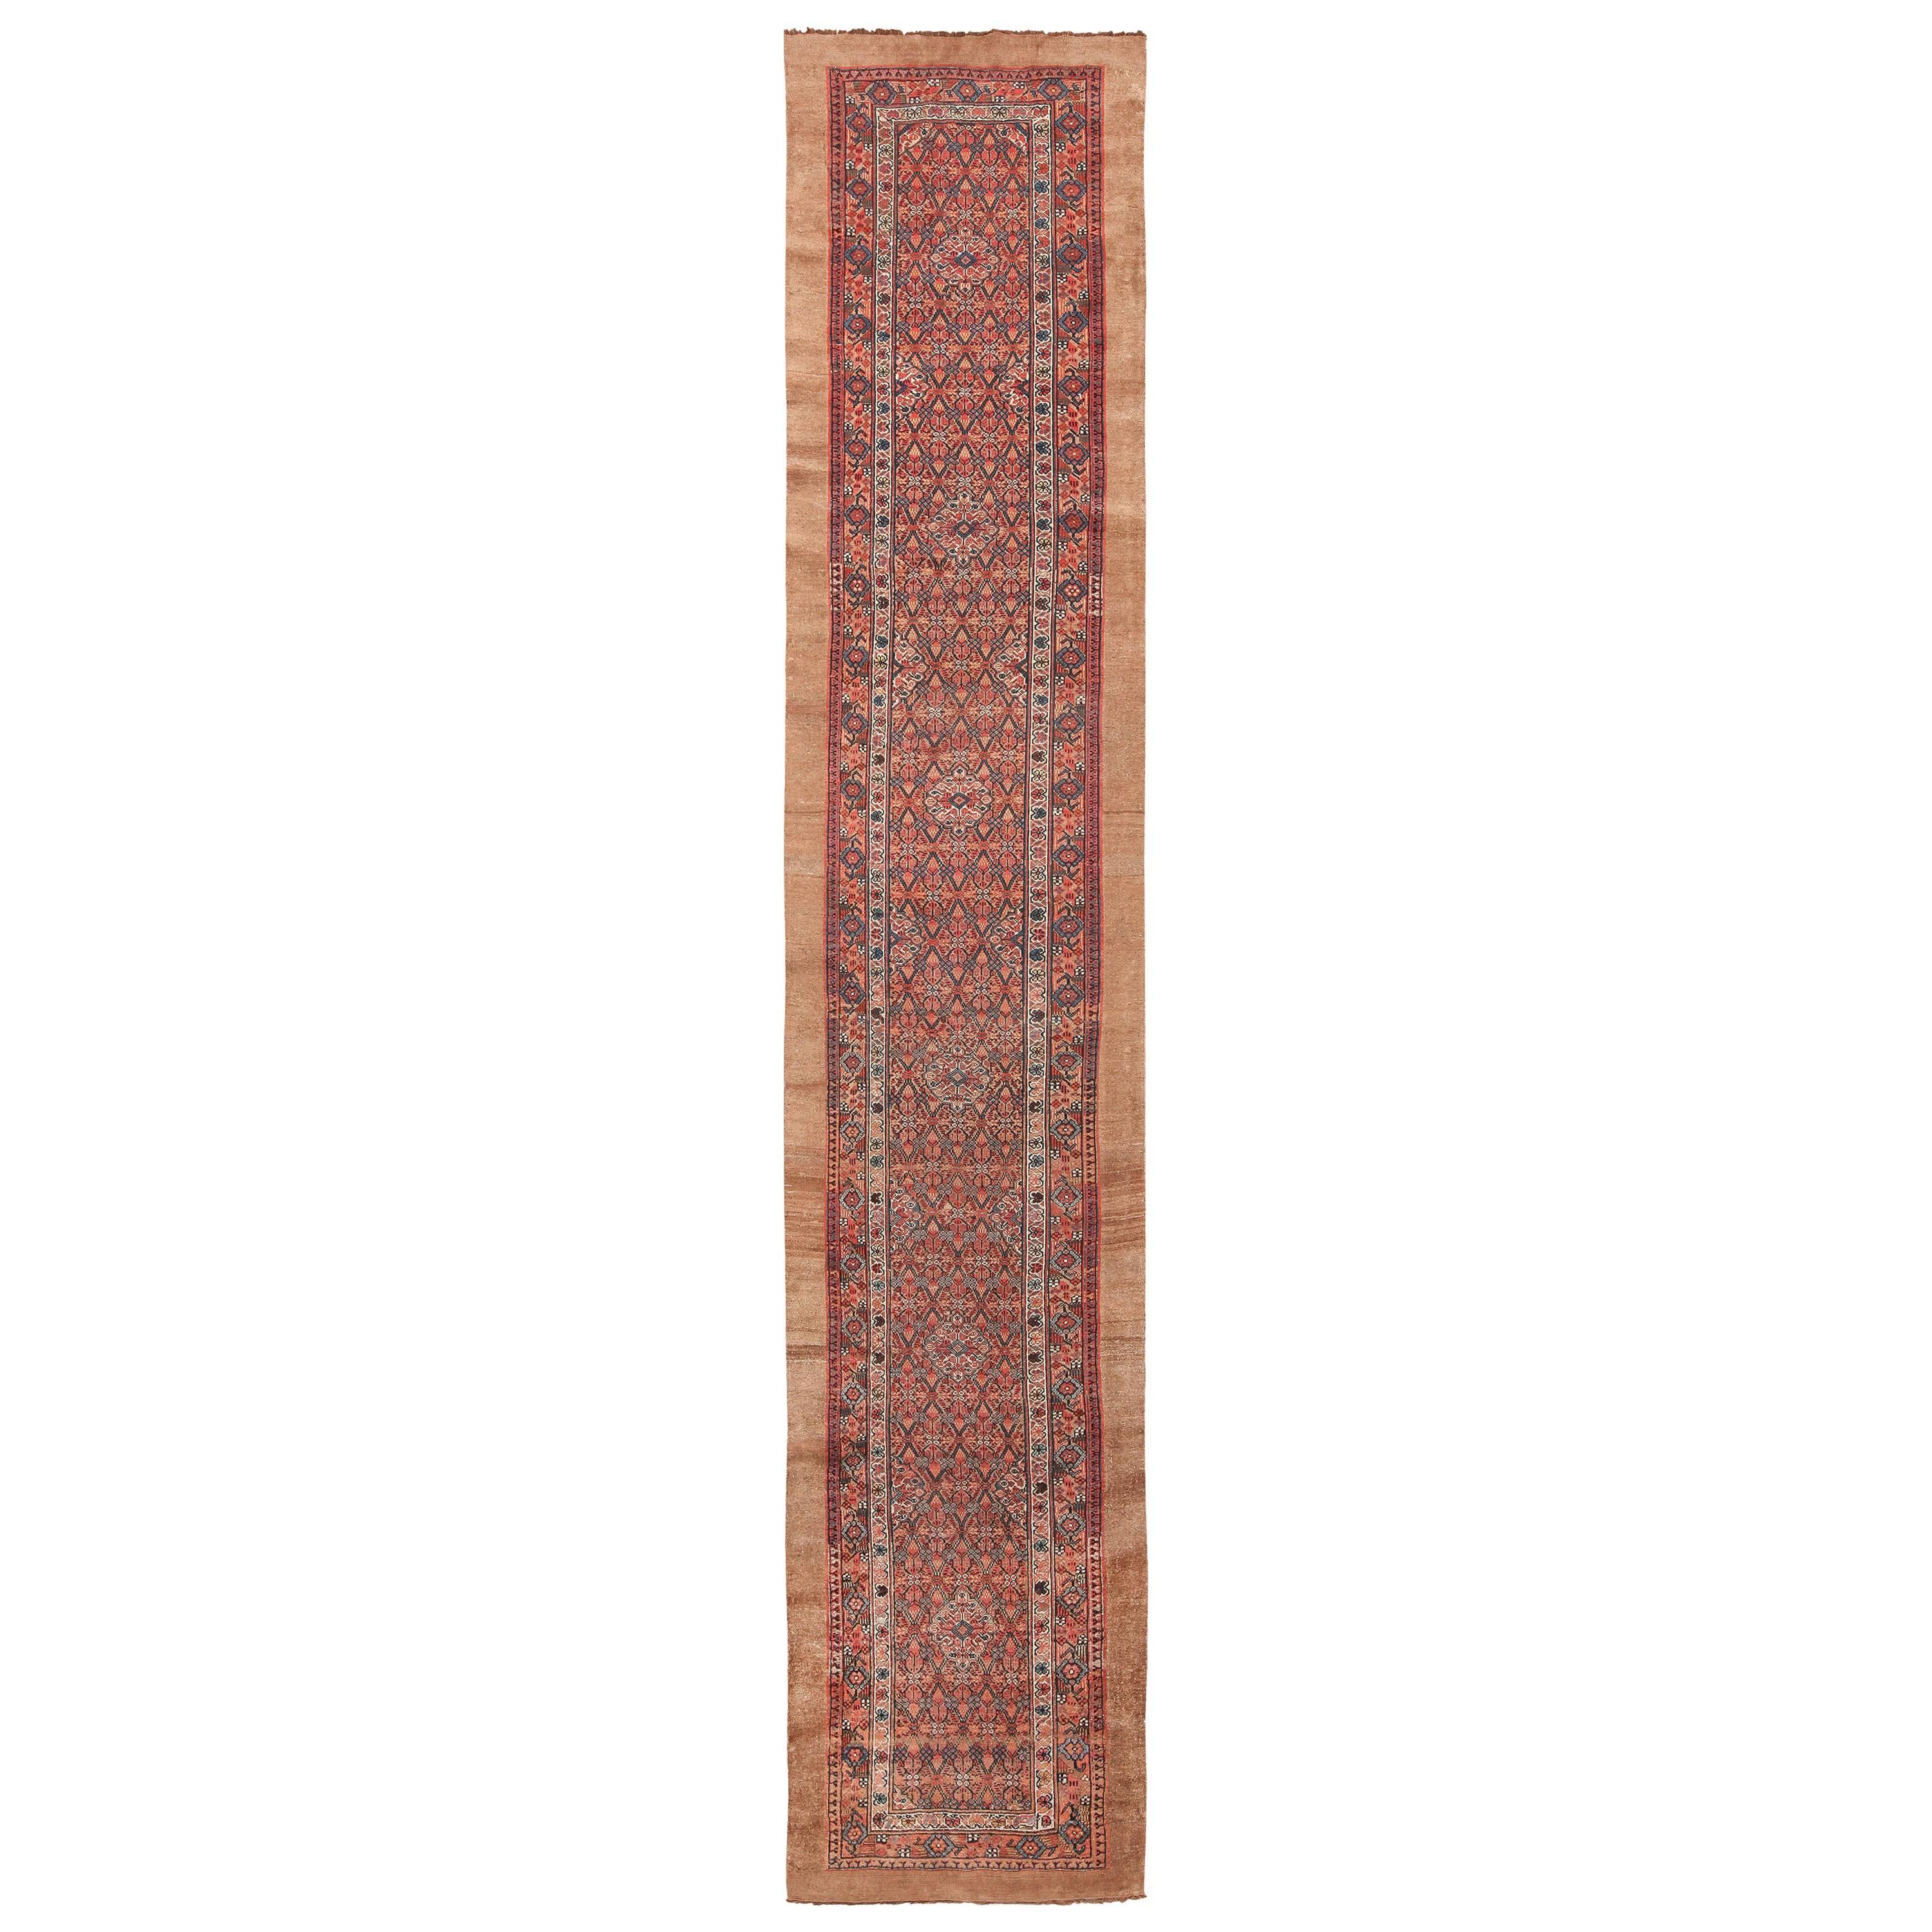 Long and Narrow Antique Tribal Persian Serab Runner Rug